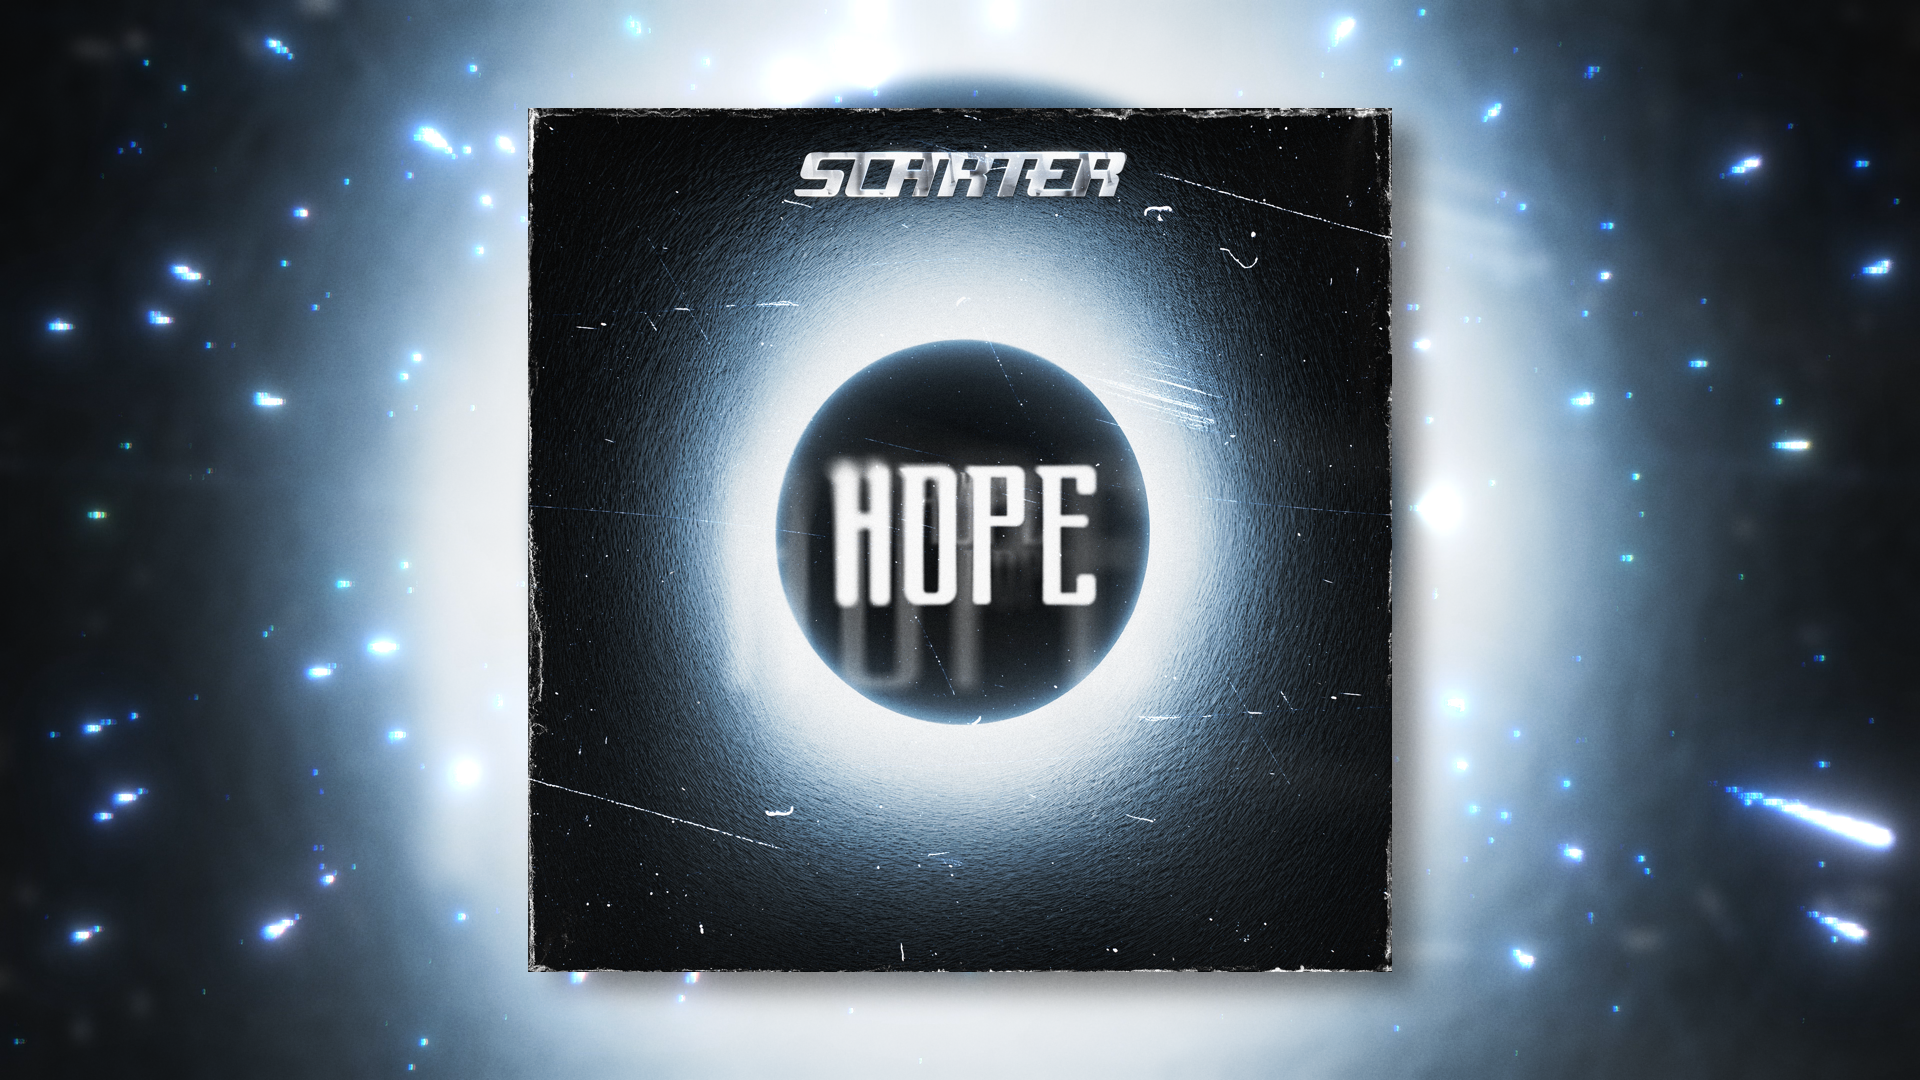 SONG: SCARTER - HOPE